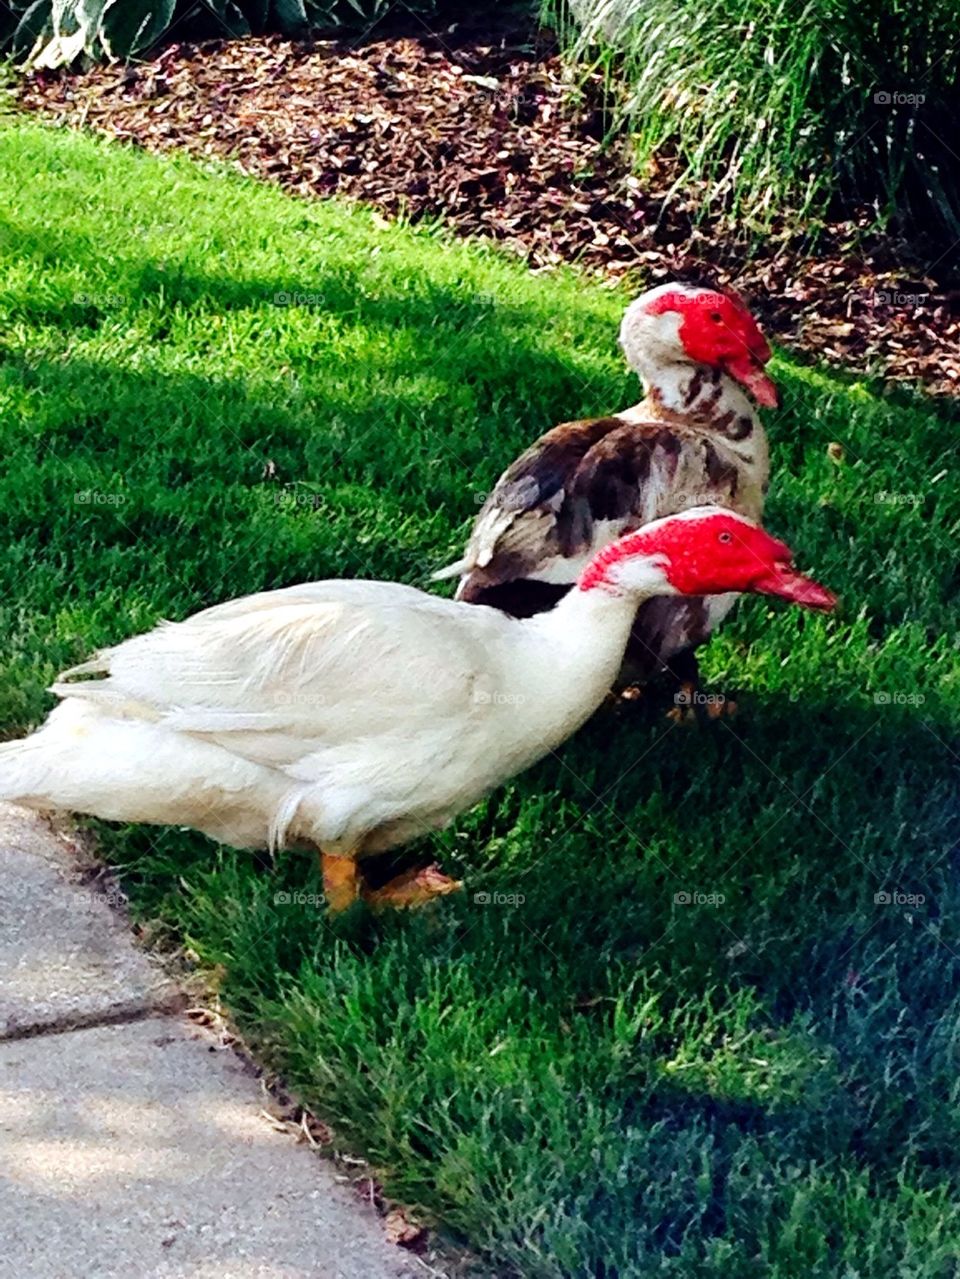 Muscovy ducks spending the summer in michigan. 